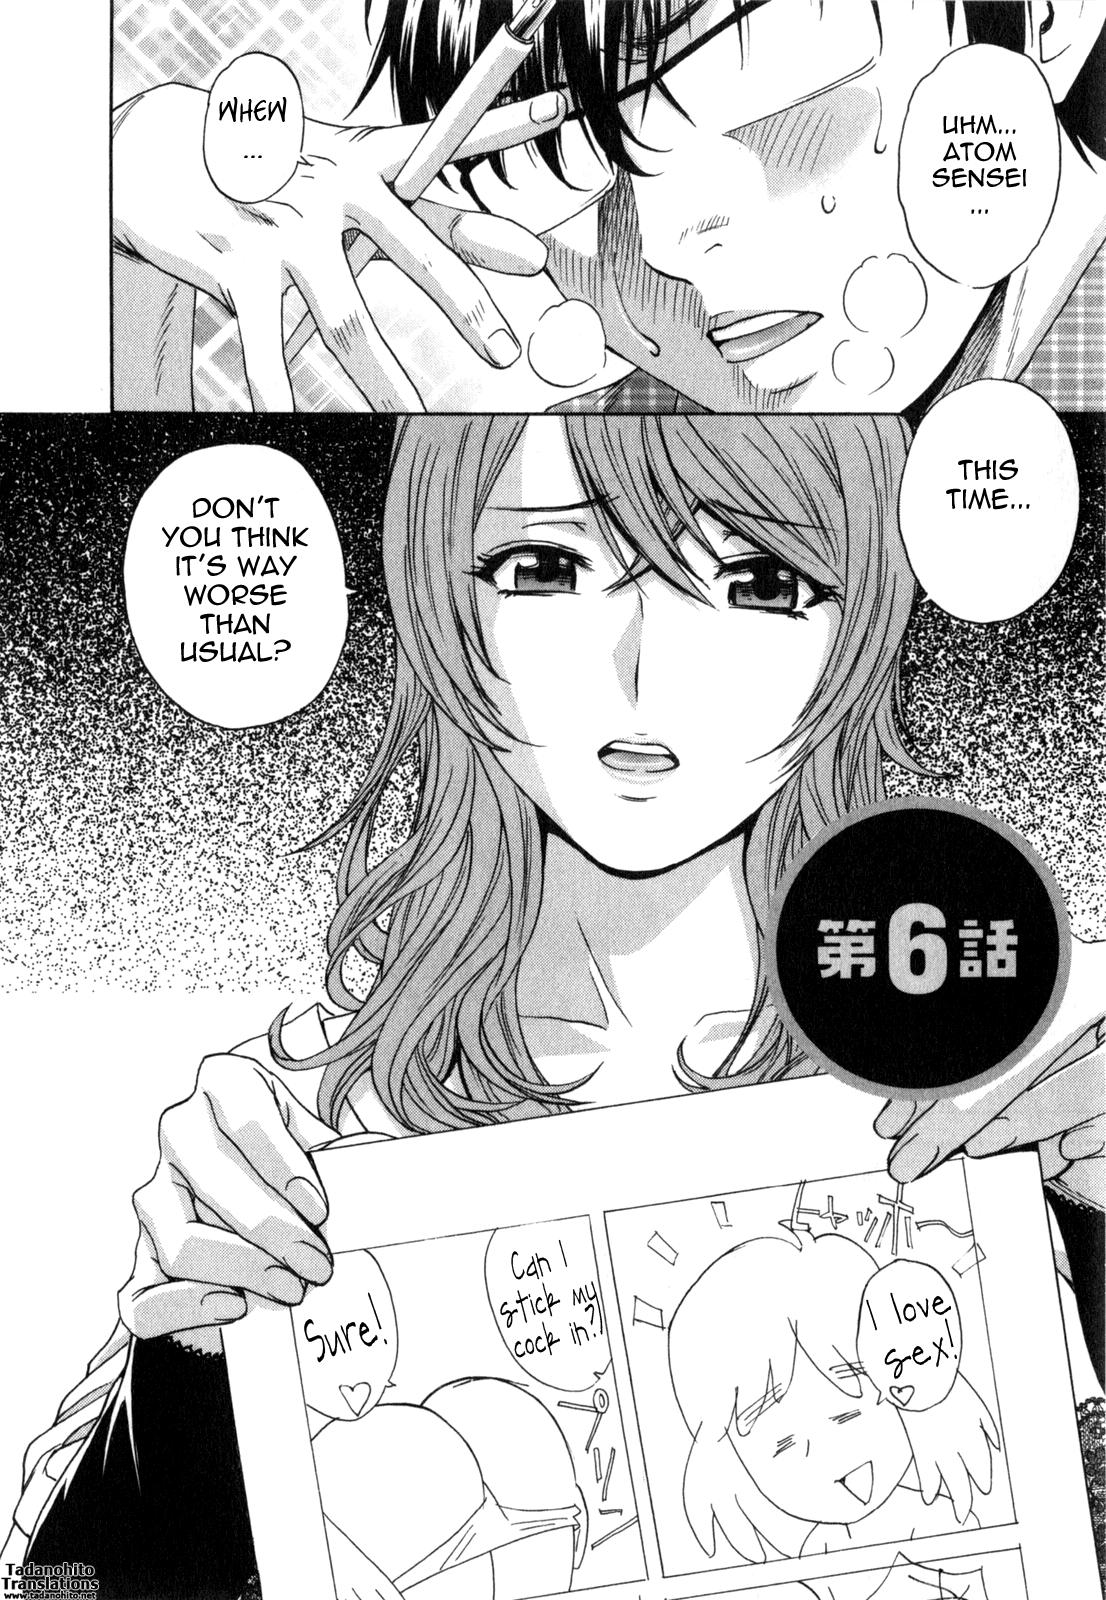 Life with Married Women Just Like a Manga 3 103